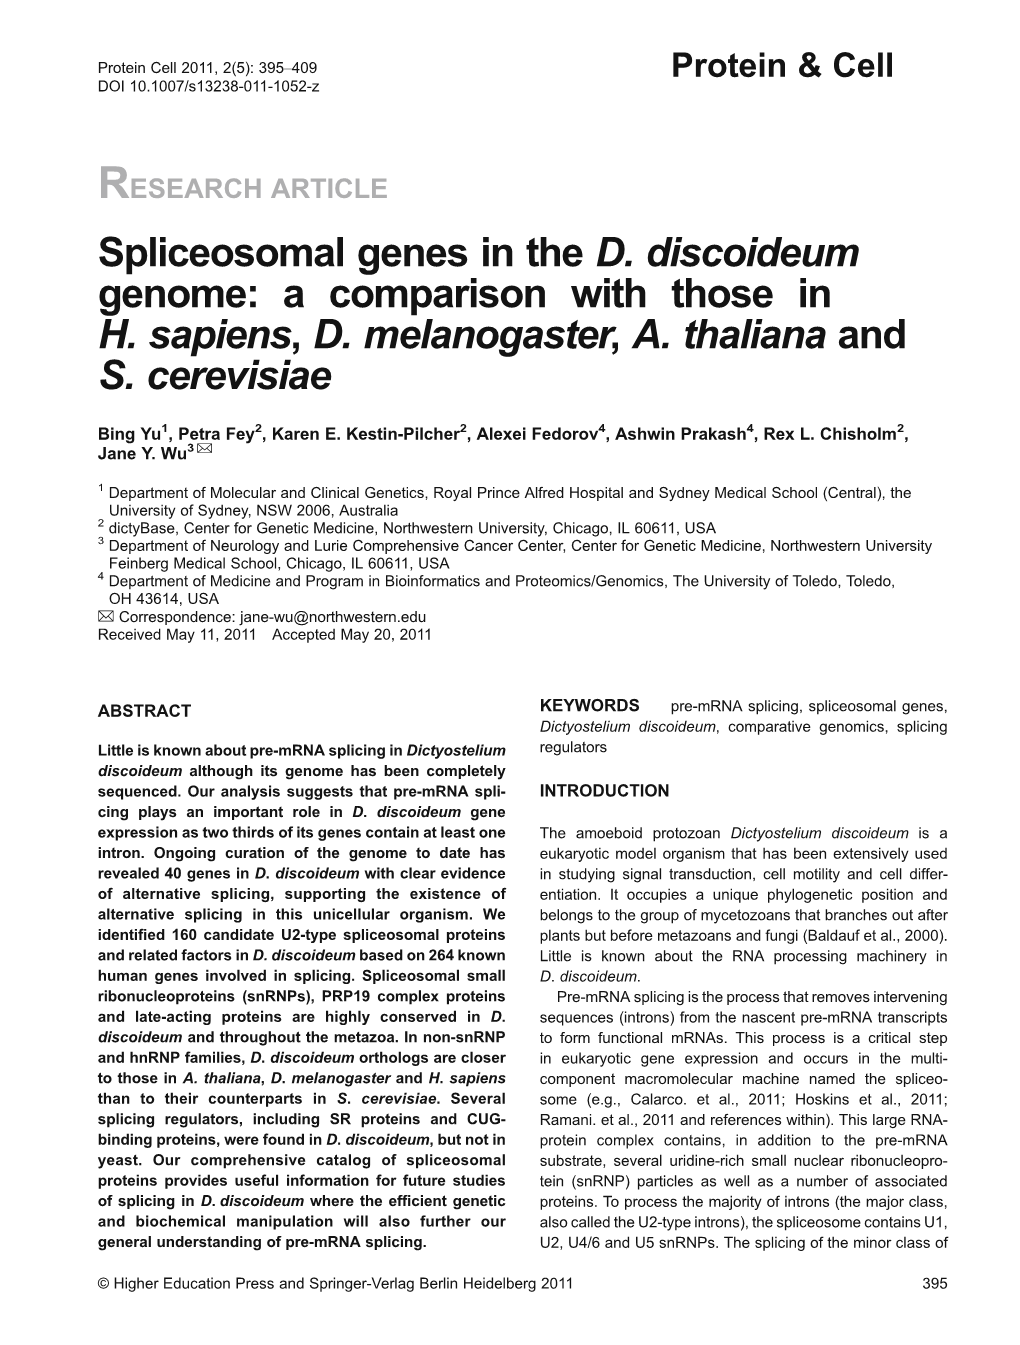 Spliceosomal Genes in the D. Discoideum Genome: a Comparison with Those in H